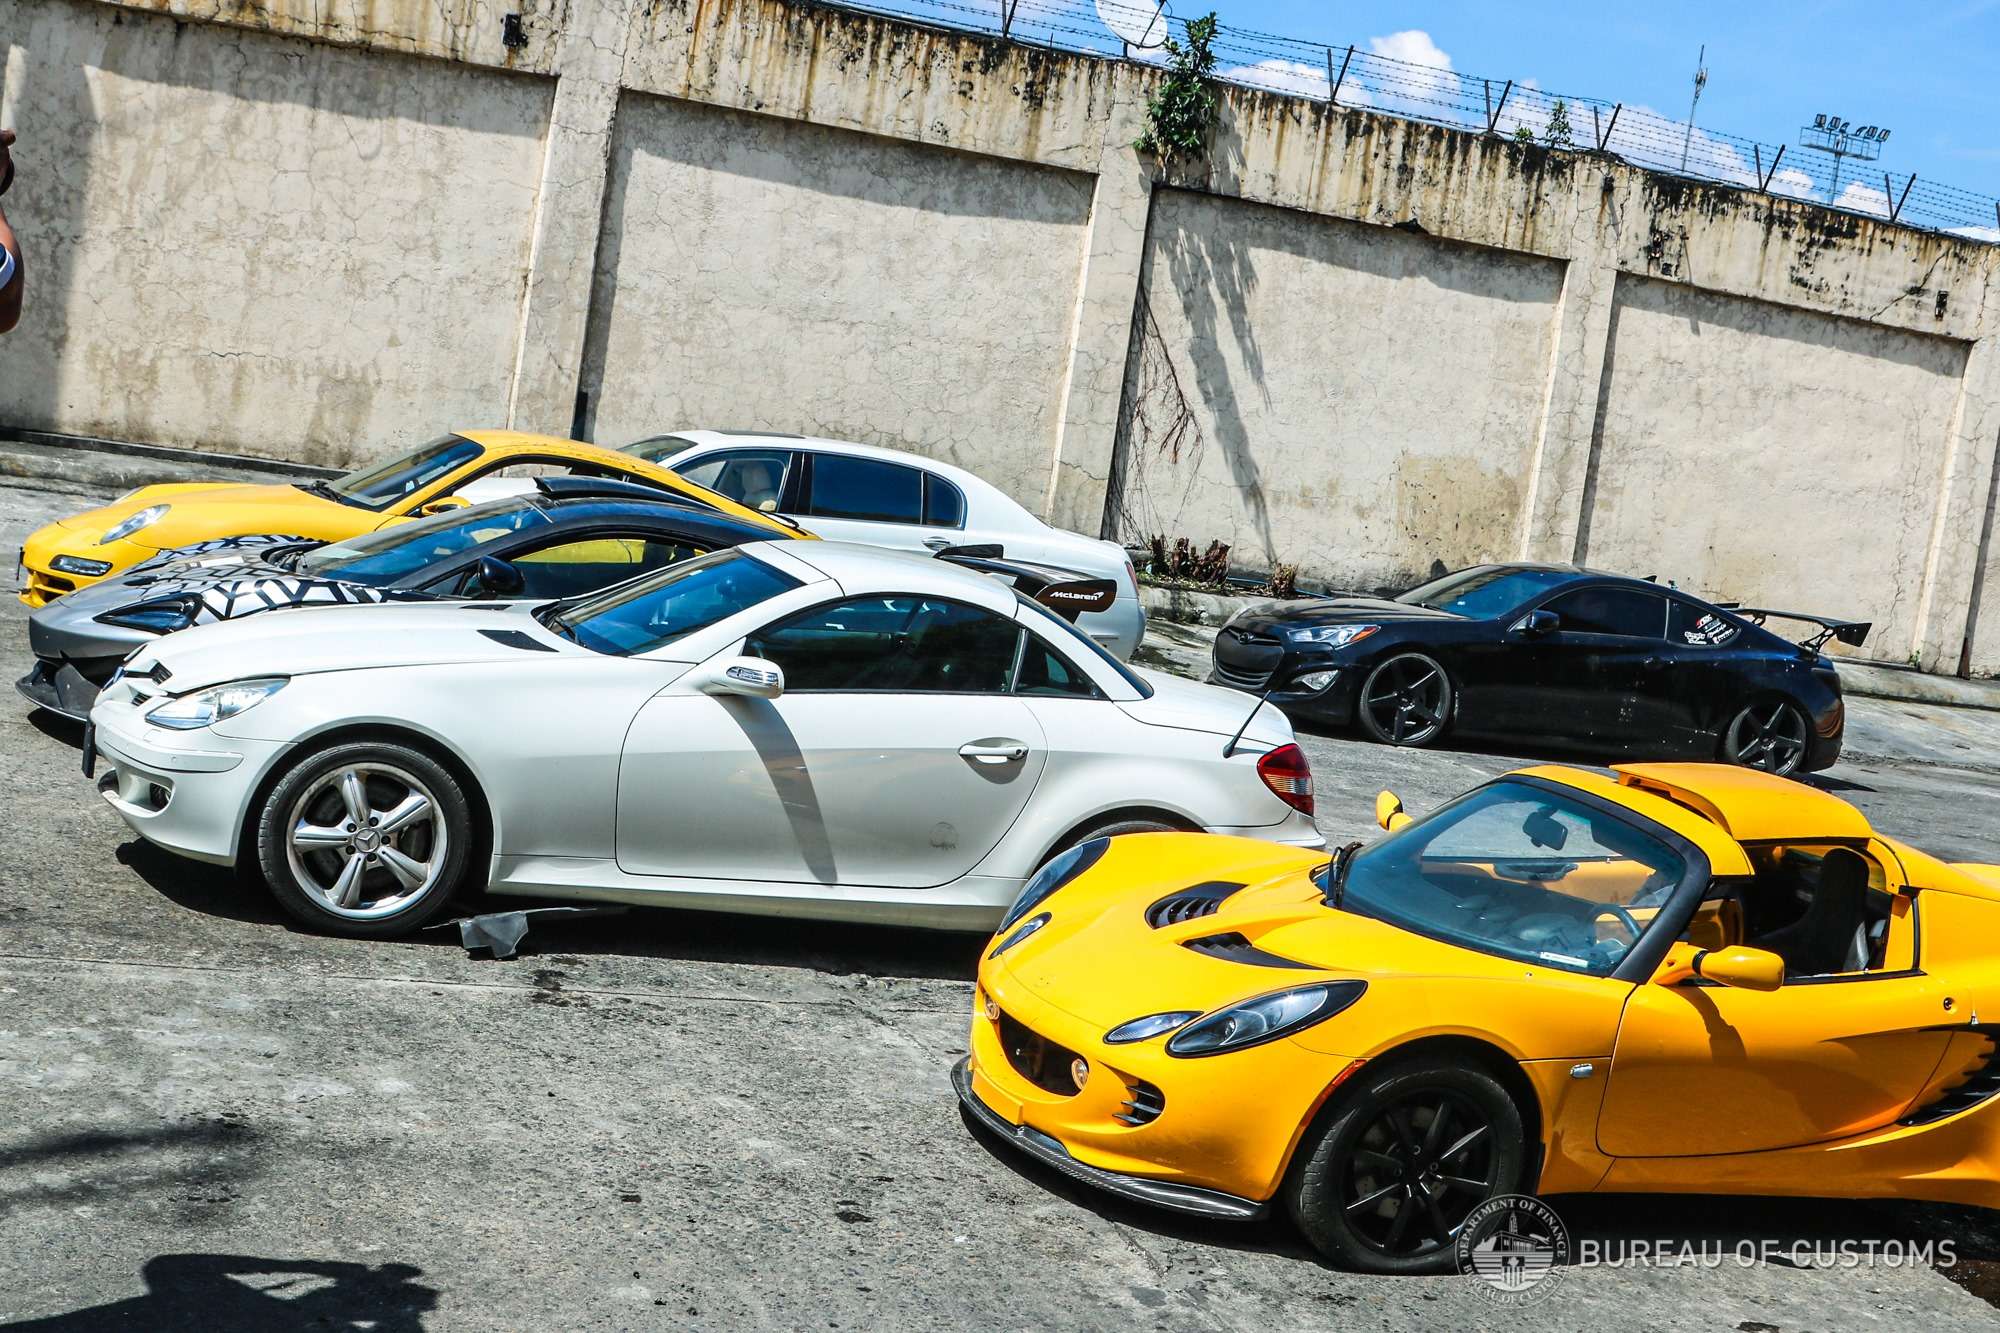 Philippine customs destroys 21 smuggled luxury cars worth INR 8.8 cr